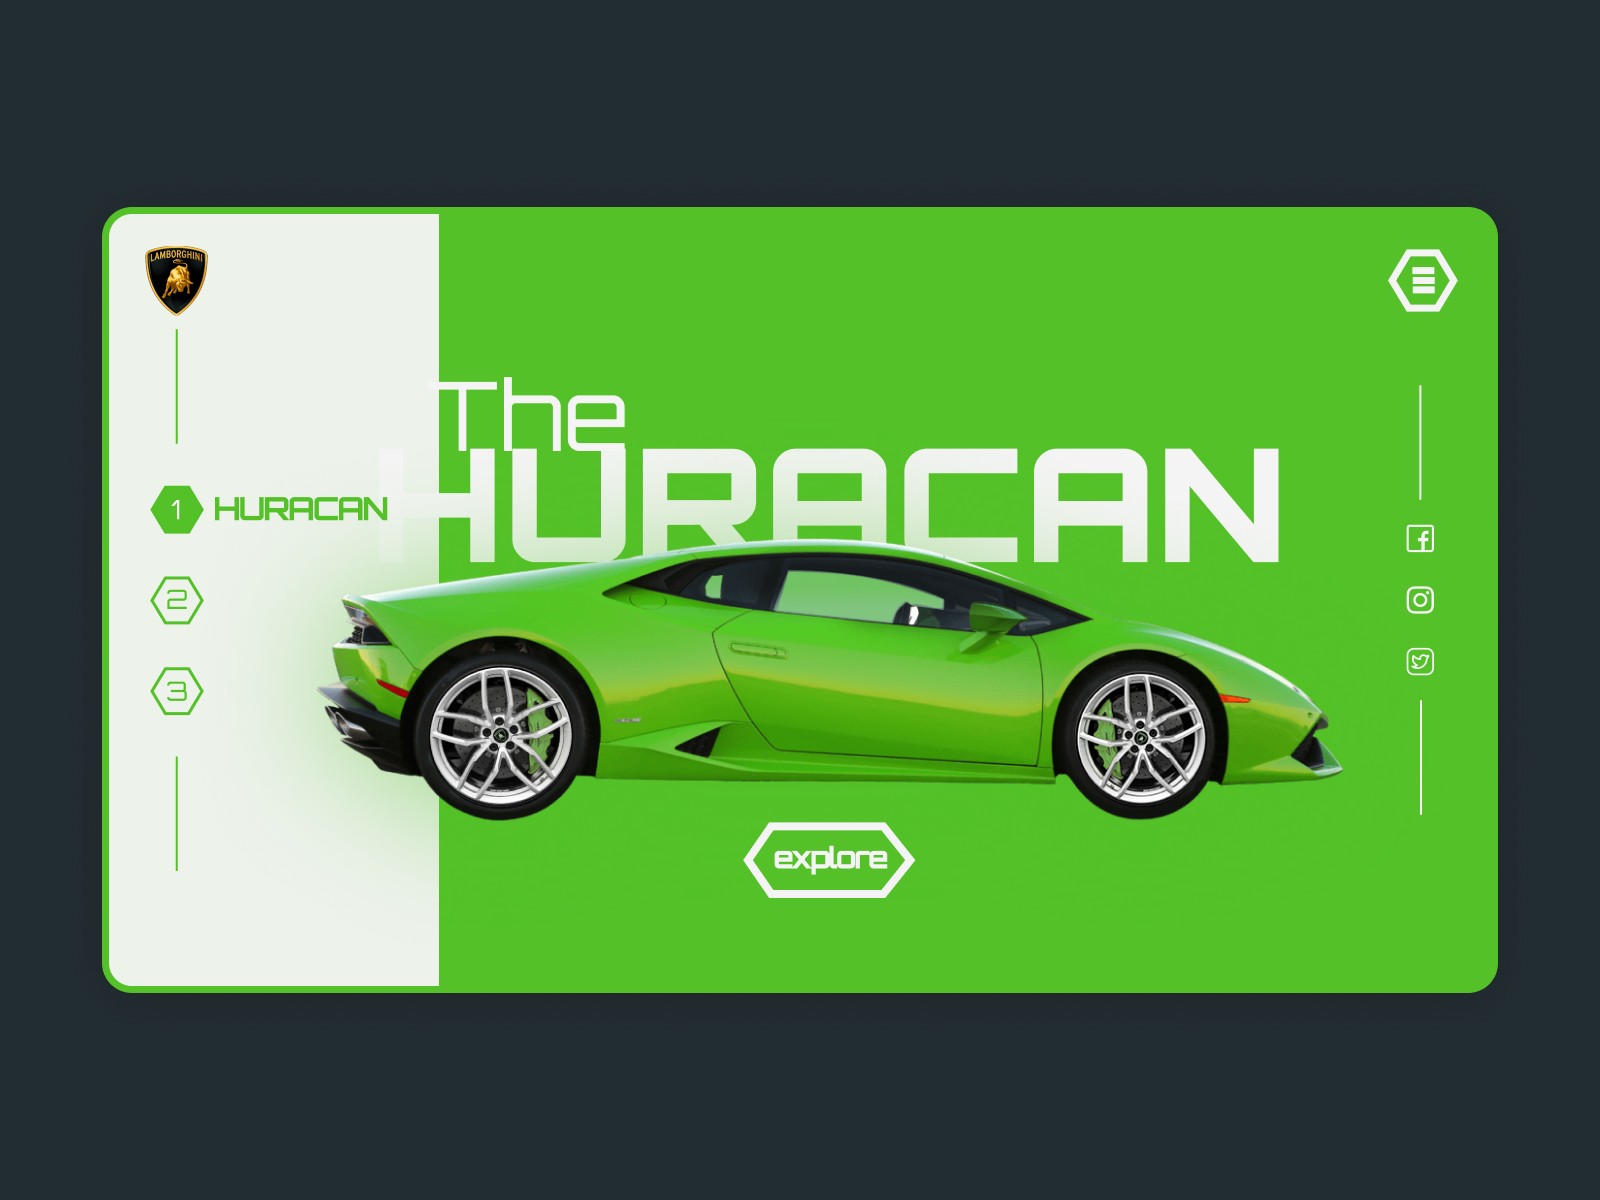 Lamborghini Huracan website concept by Rohit Methwani on Dribbble